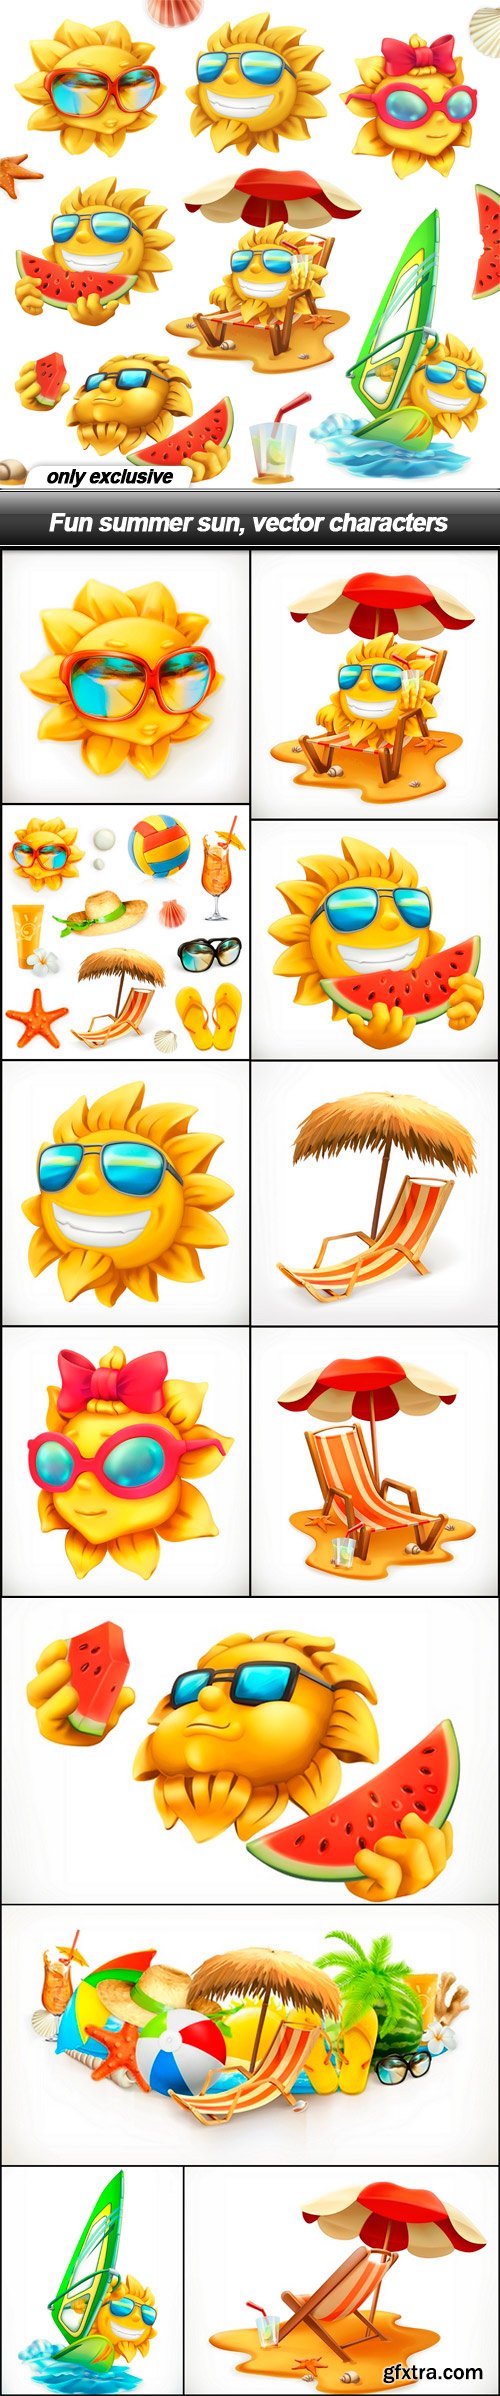 Fun summer sun, vector characters - 13 EPS